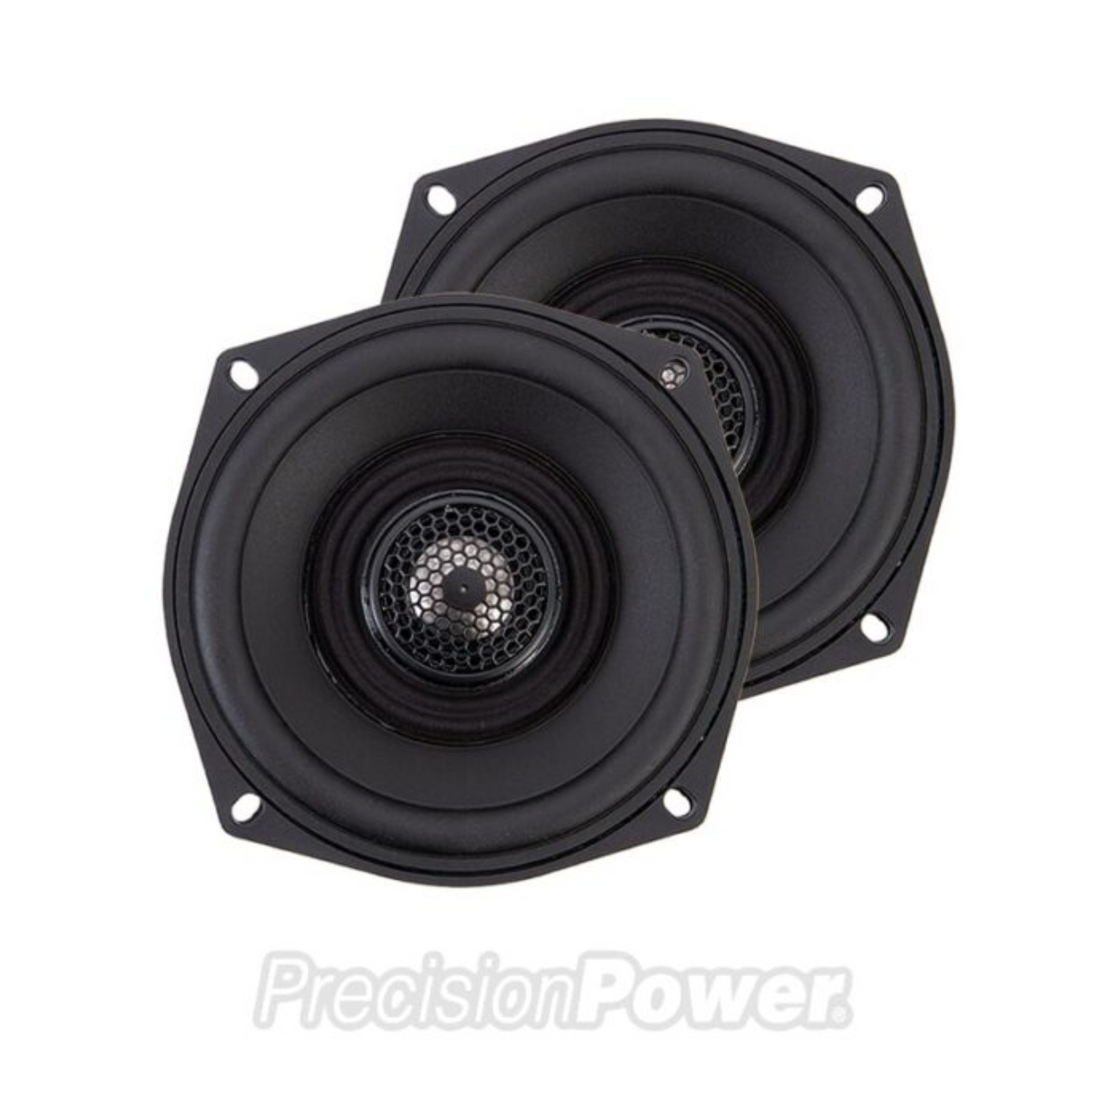 Premium Coaxial 5.25" Motorcycle Speaker 2Ω